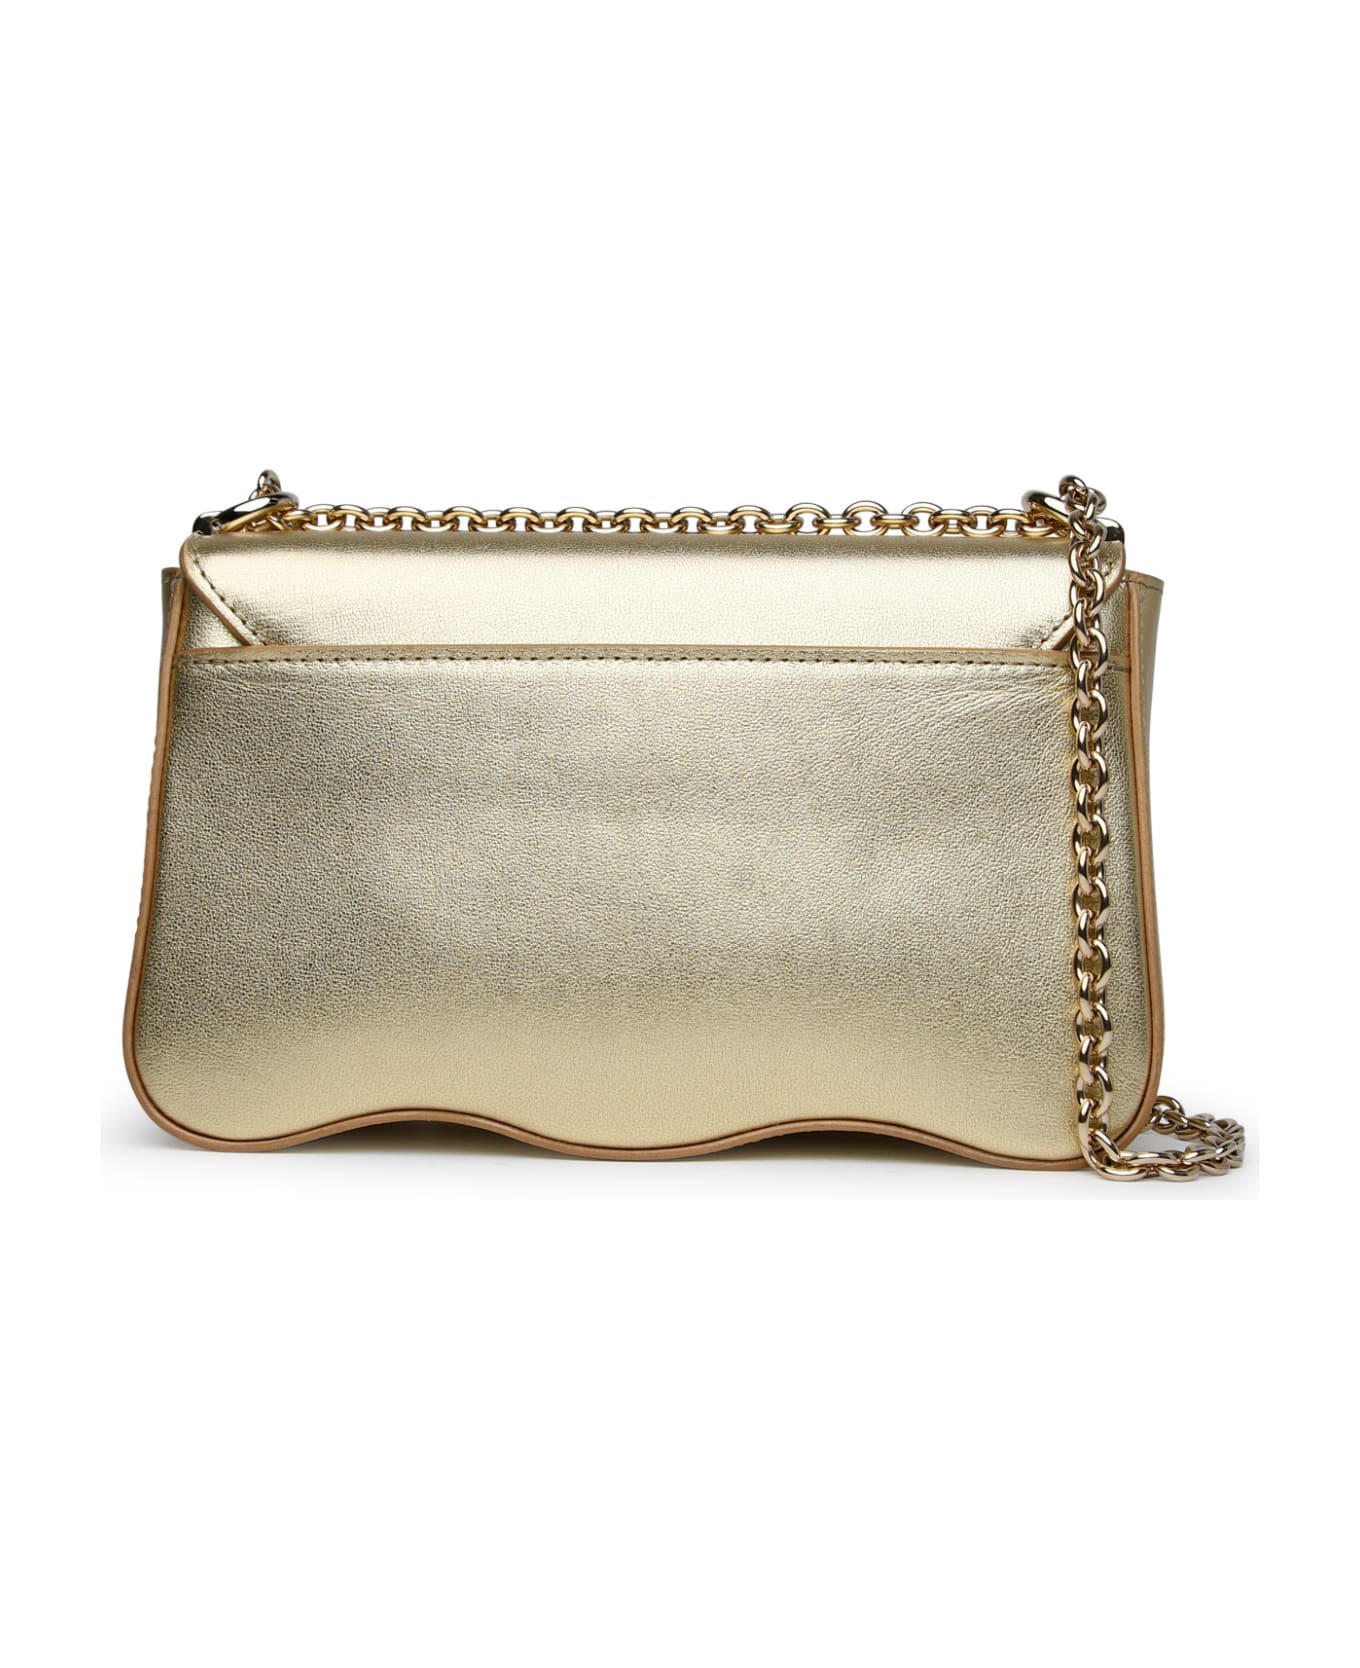 Furla 'furla 1927' Gold Calf Leather Bag - Color Gold ショルダーバッグ